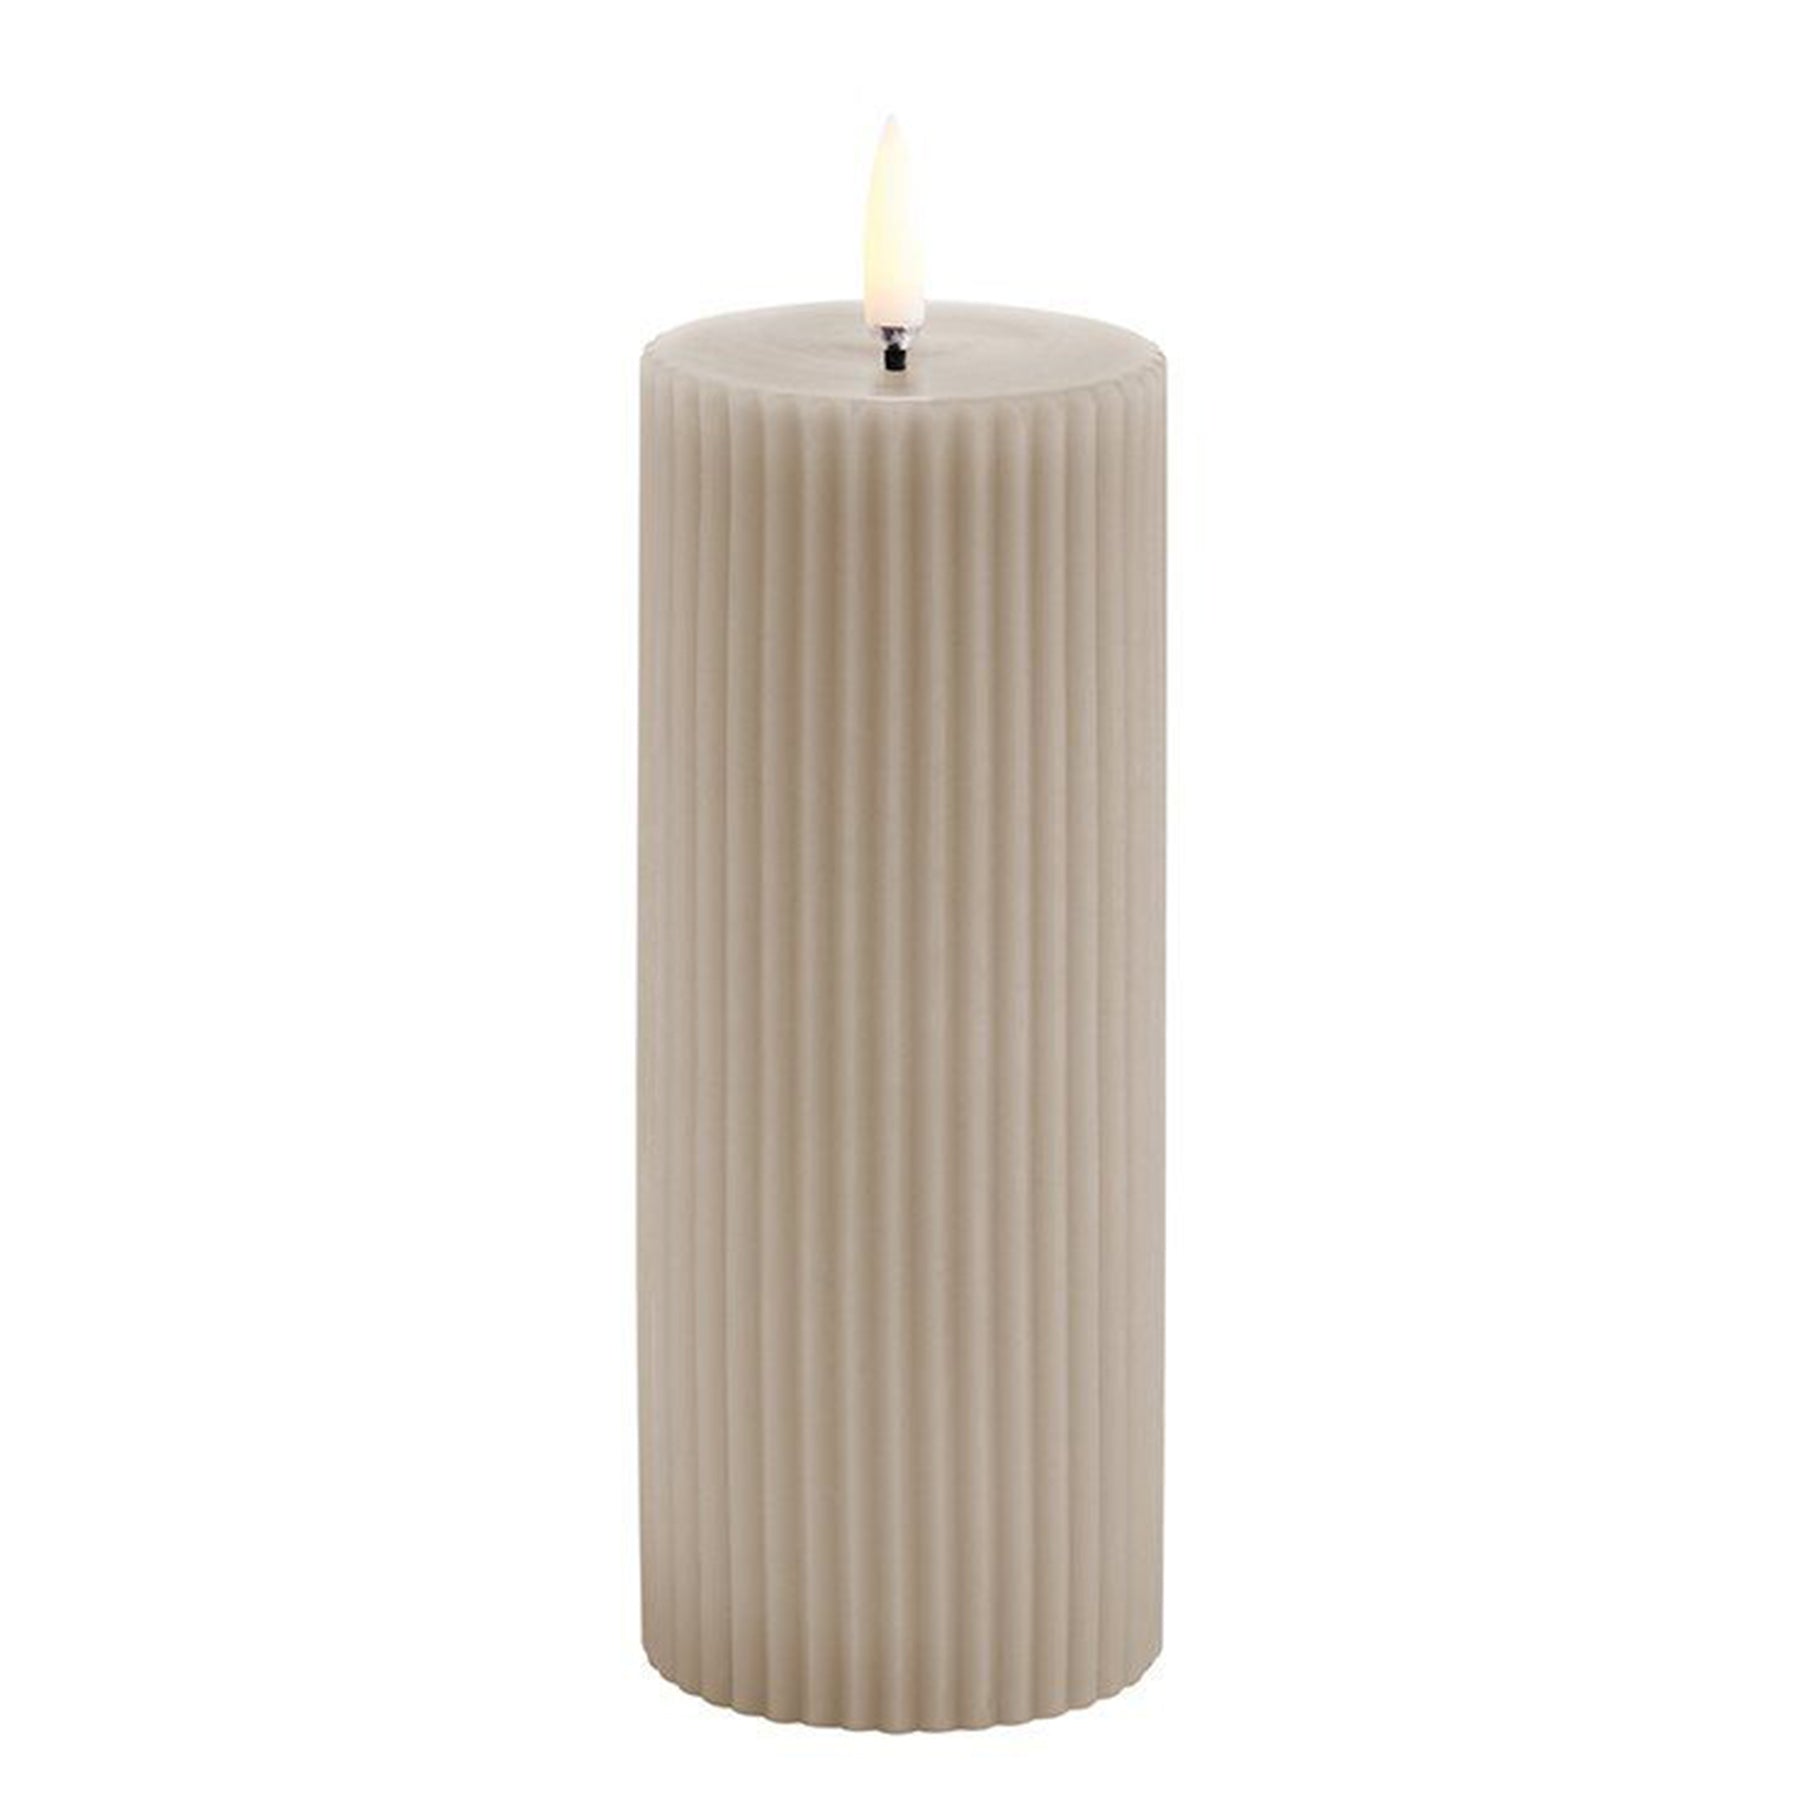 LED Pillar Candle 15 cm, Sand Stone - شمعة LED مضيئة 15 سم, لون بيج